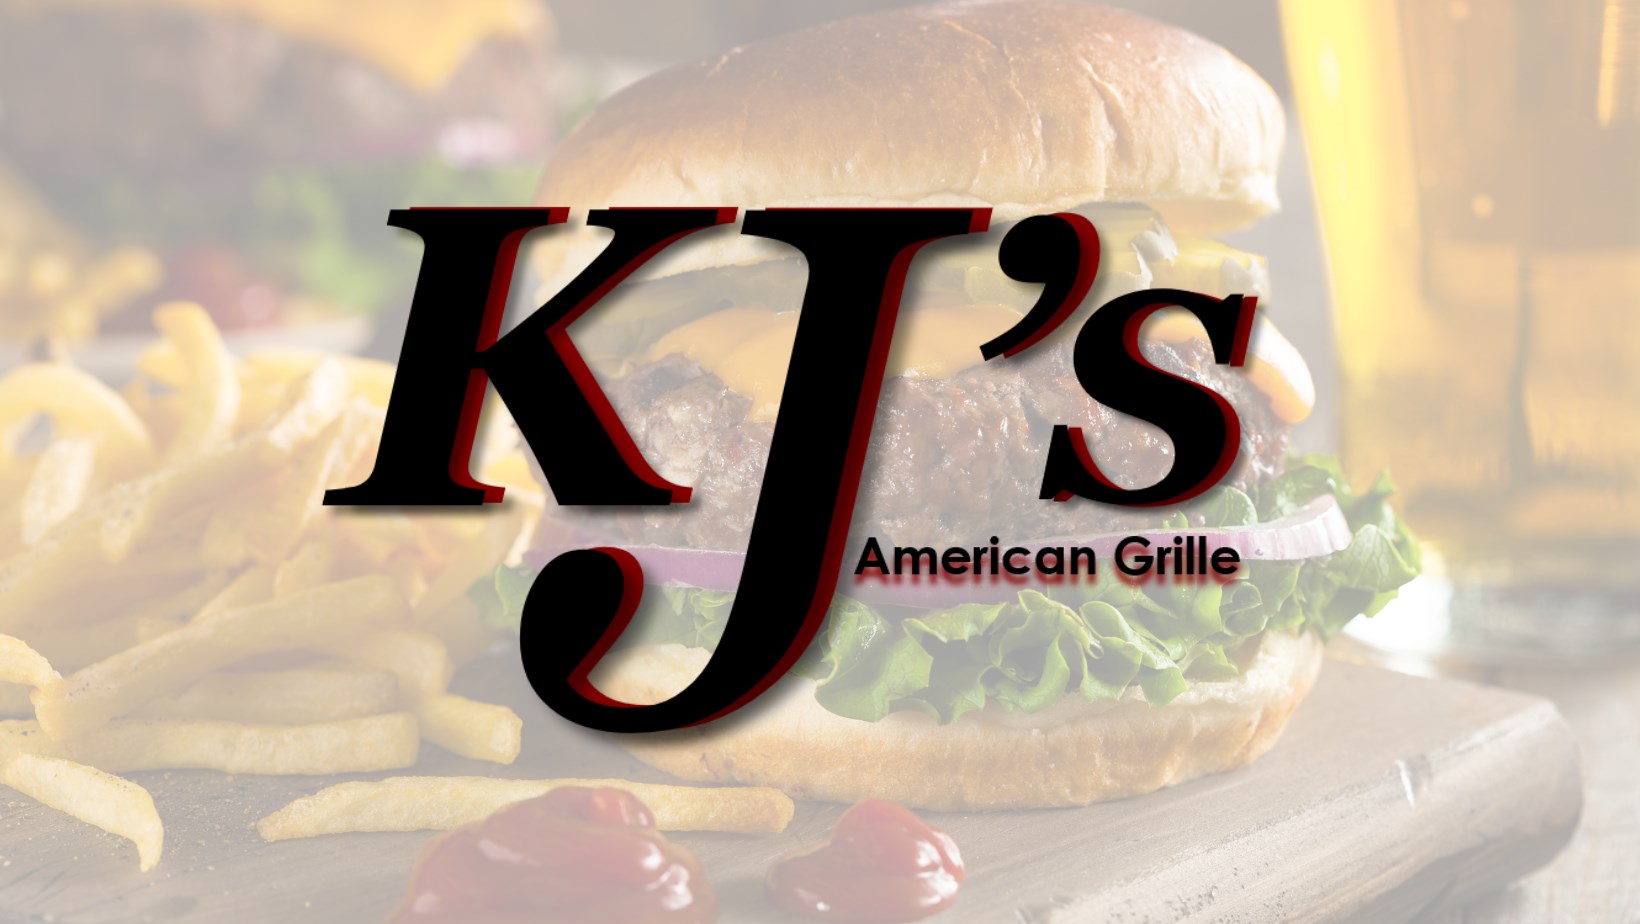 KJ's American Grille